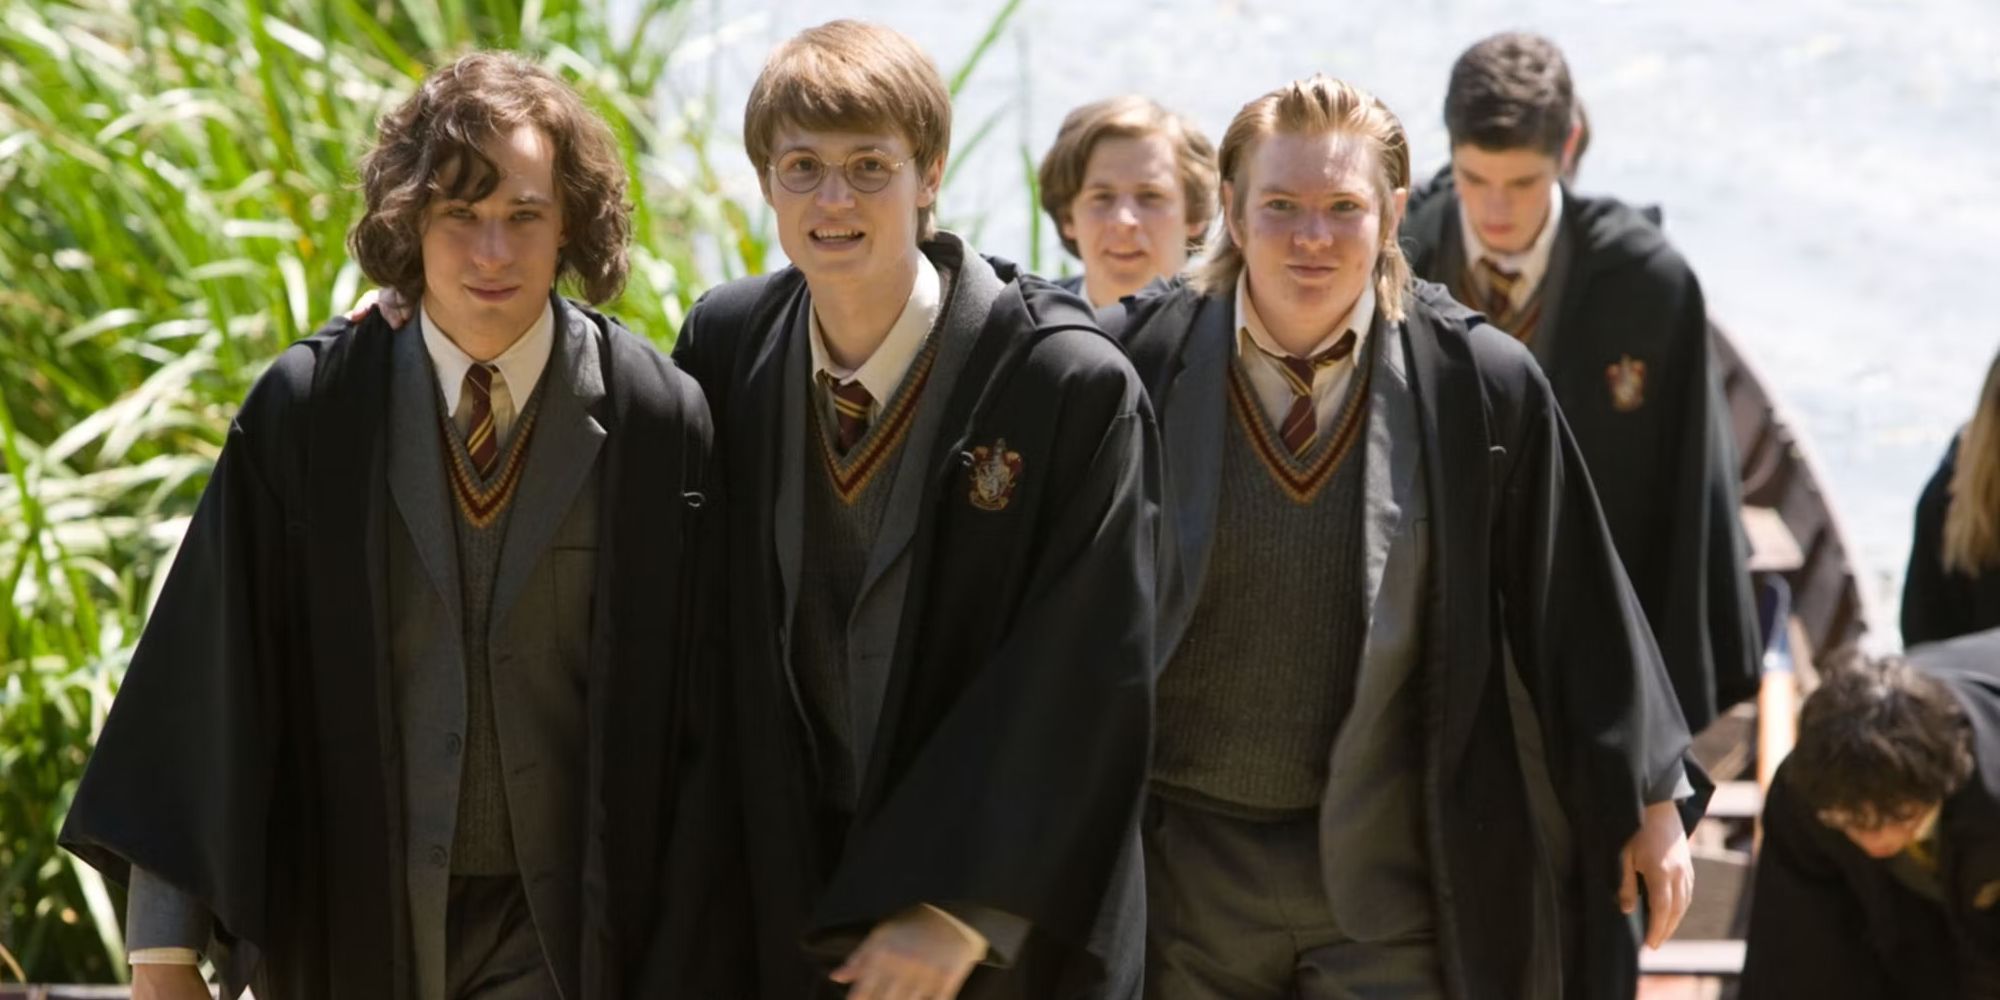 James Potter, Sirius Black and peter pettigrew at hogwarts